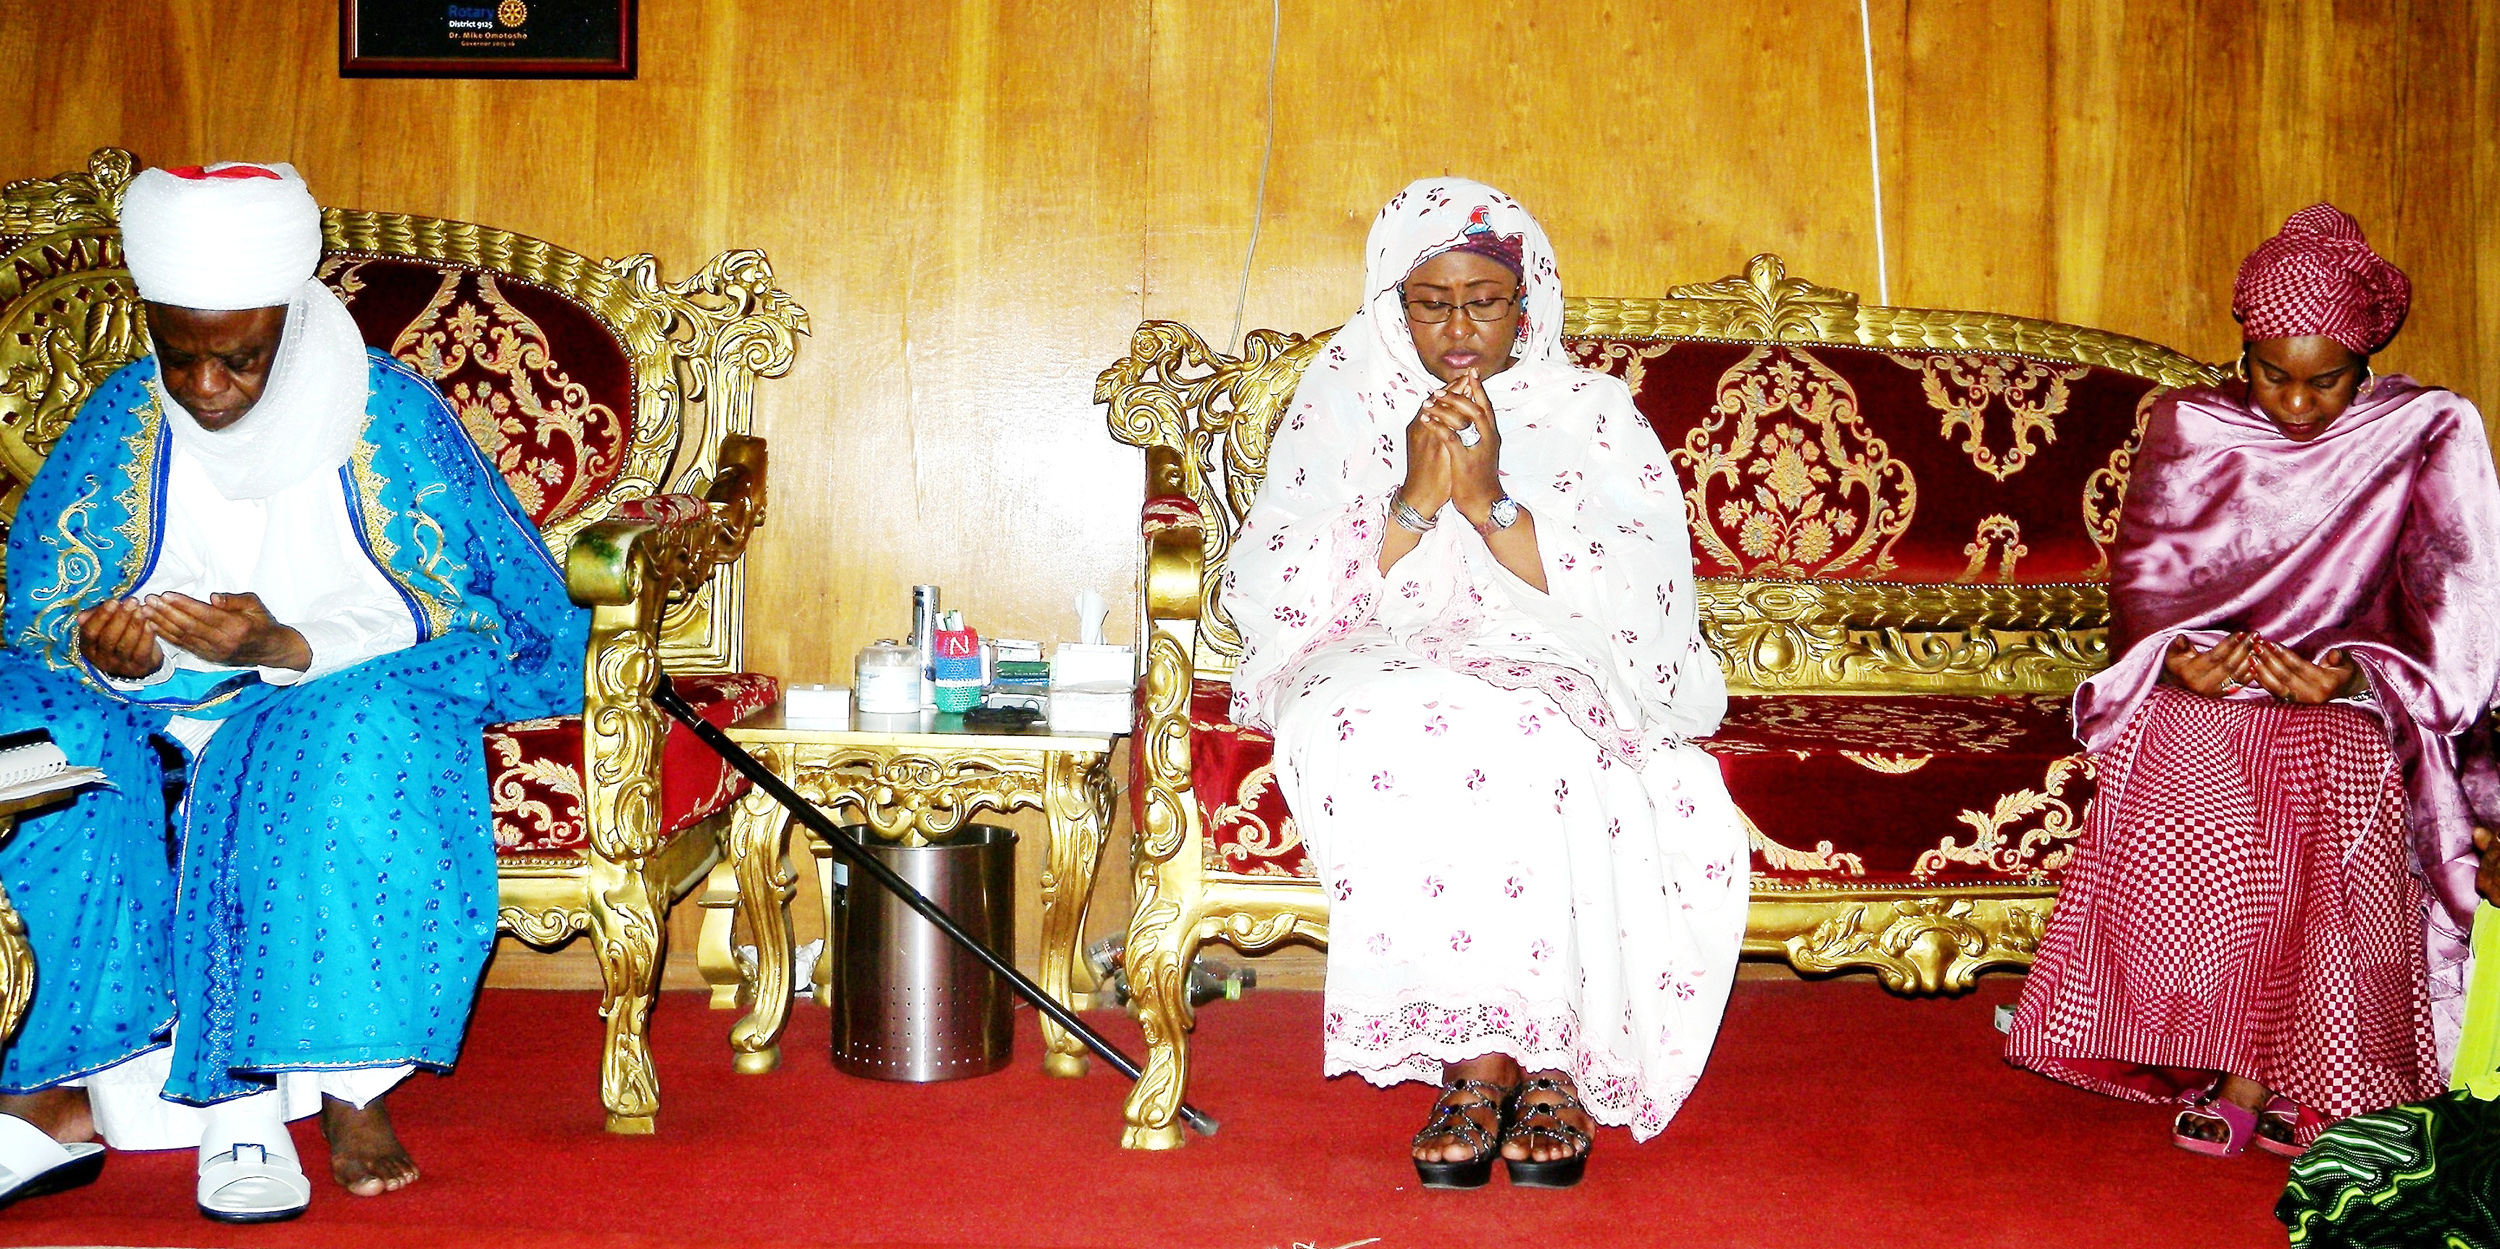 Aisha Buhari In Yola To Condole The Family of Elder Statesman Wazirin Adamawa - NTA News